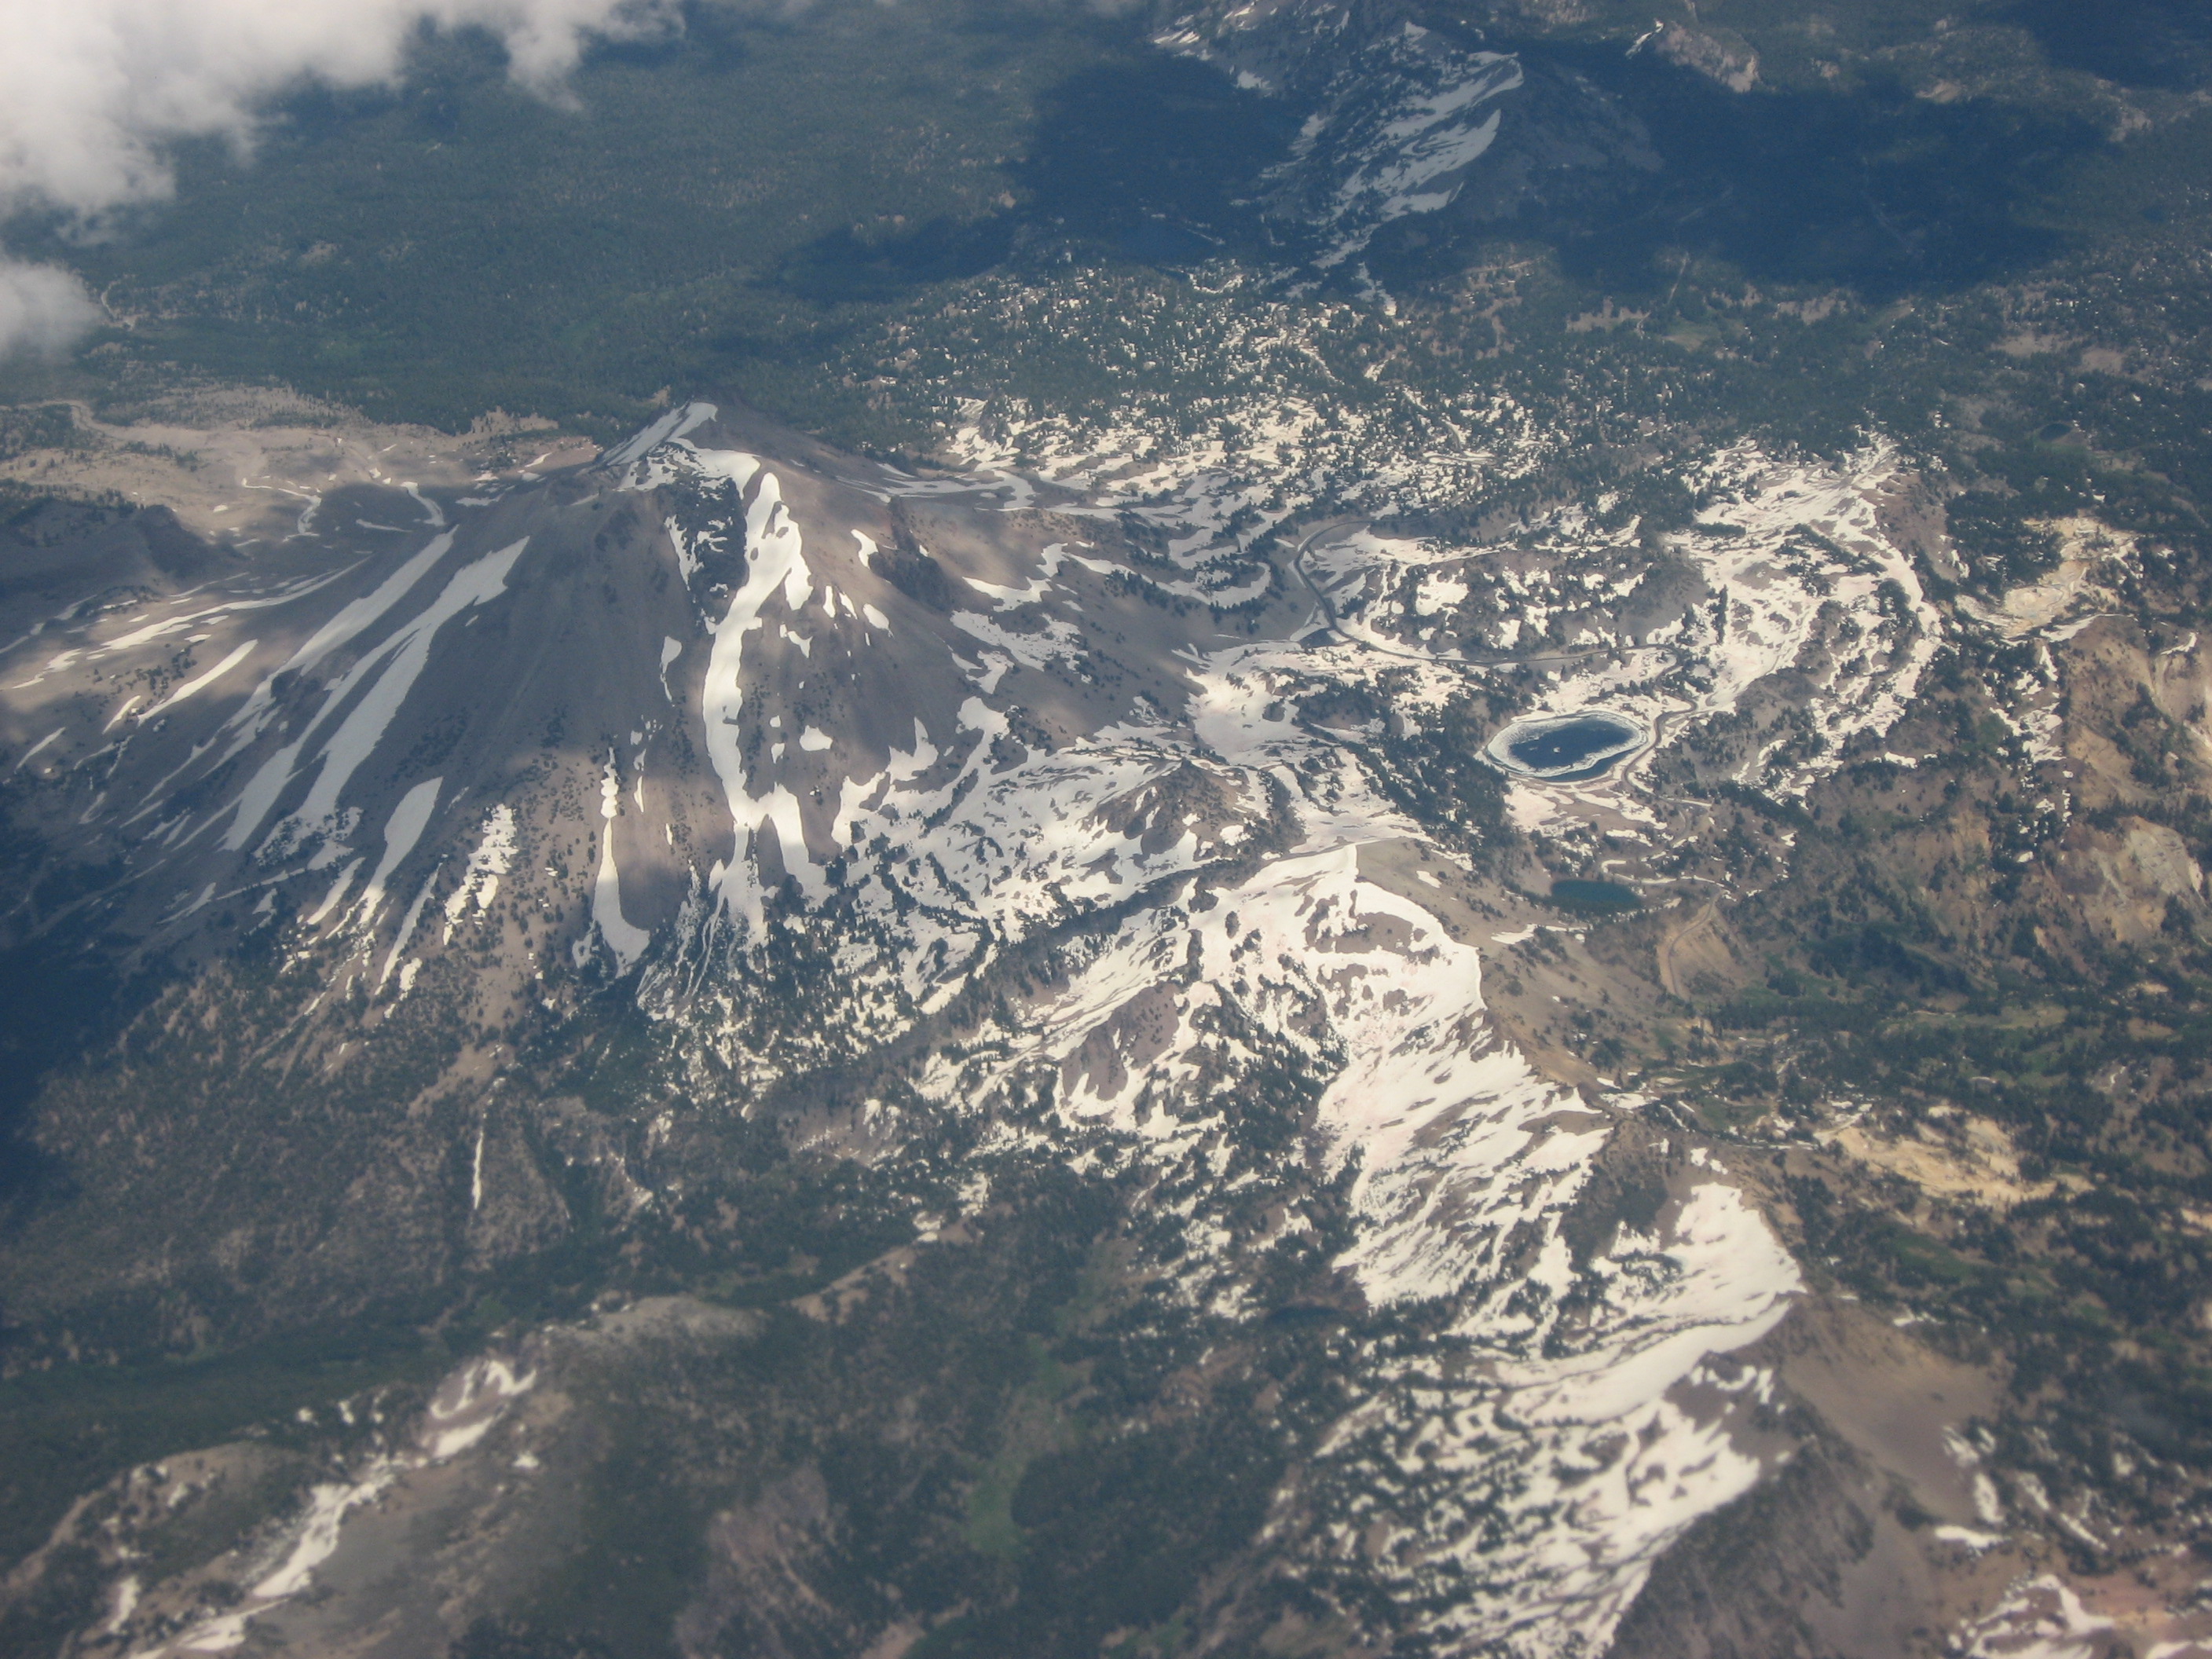 Lassen Peak from the air.